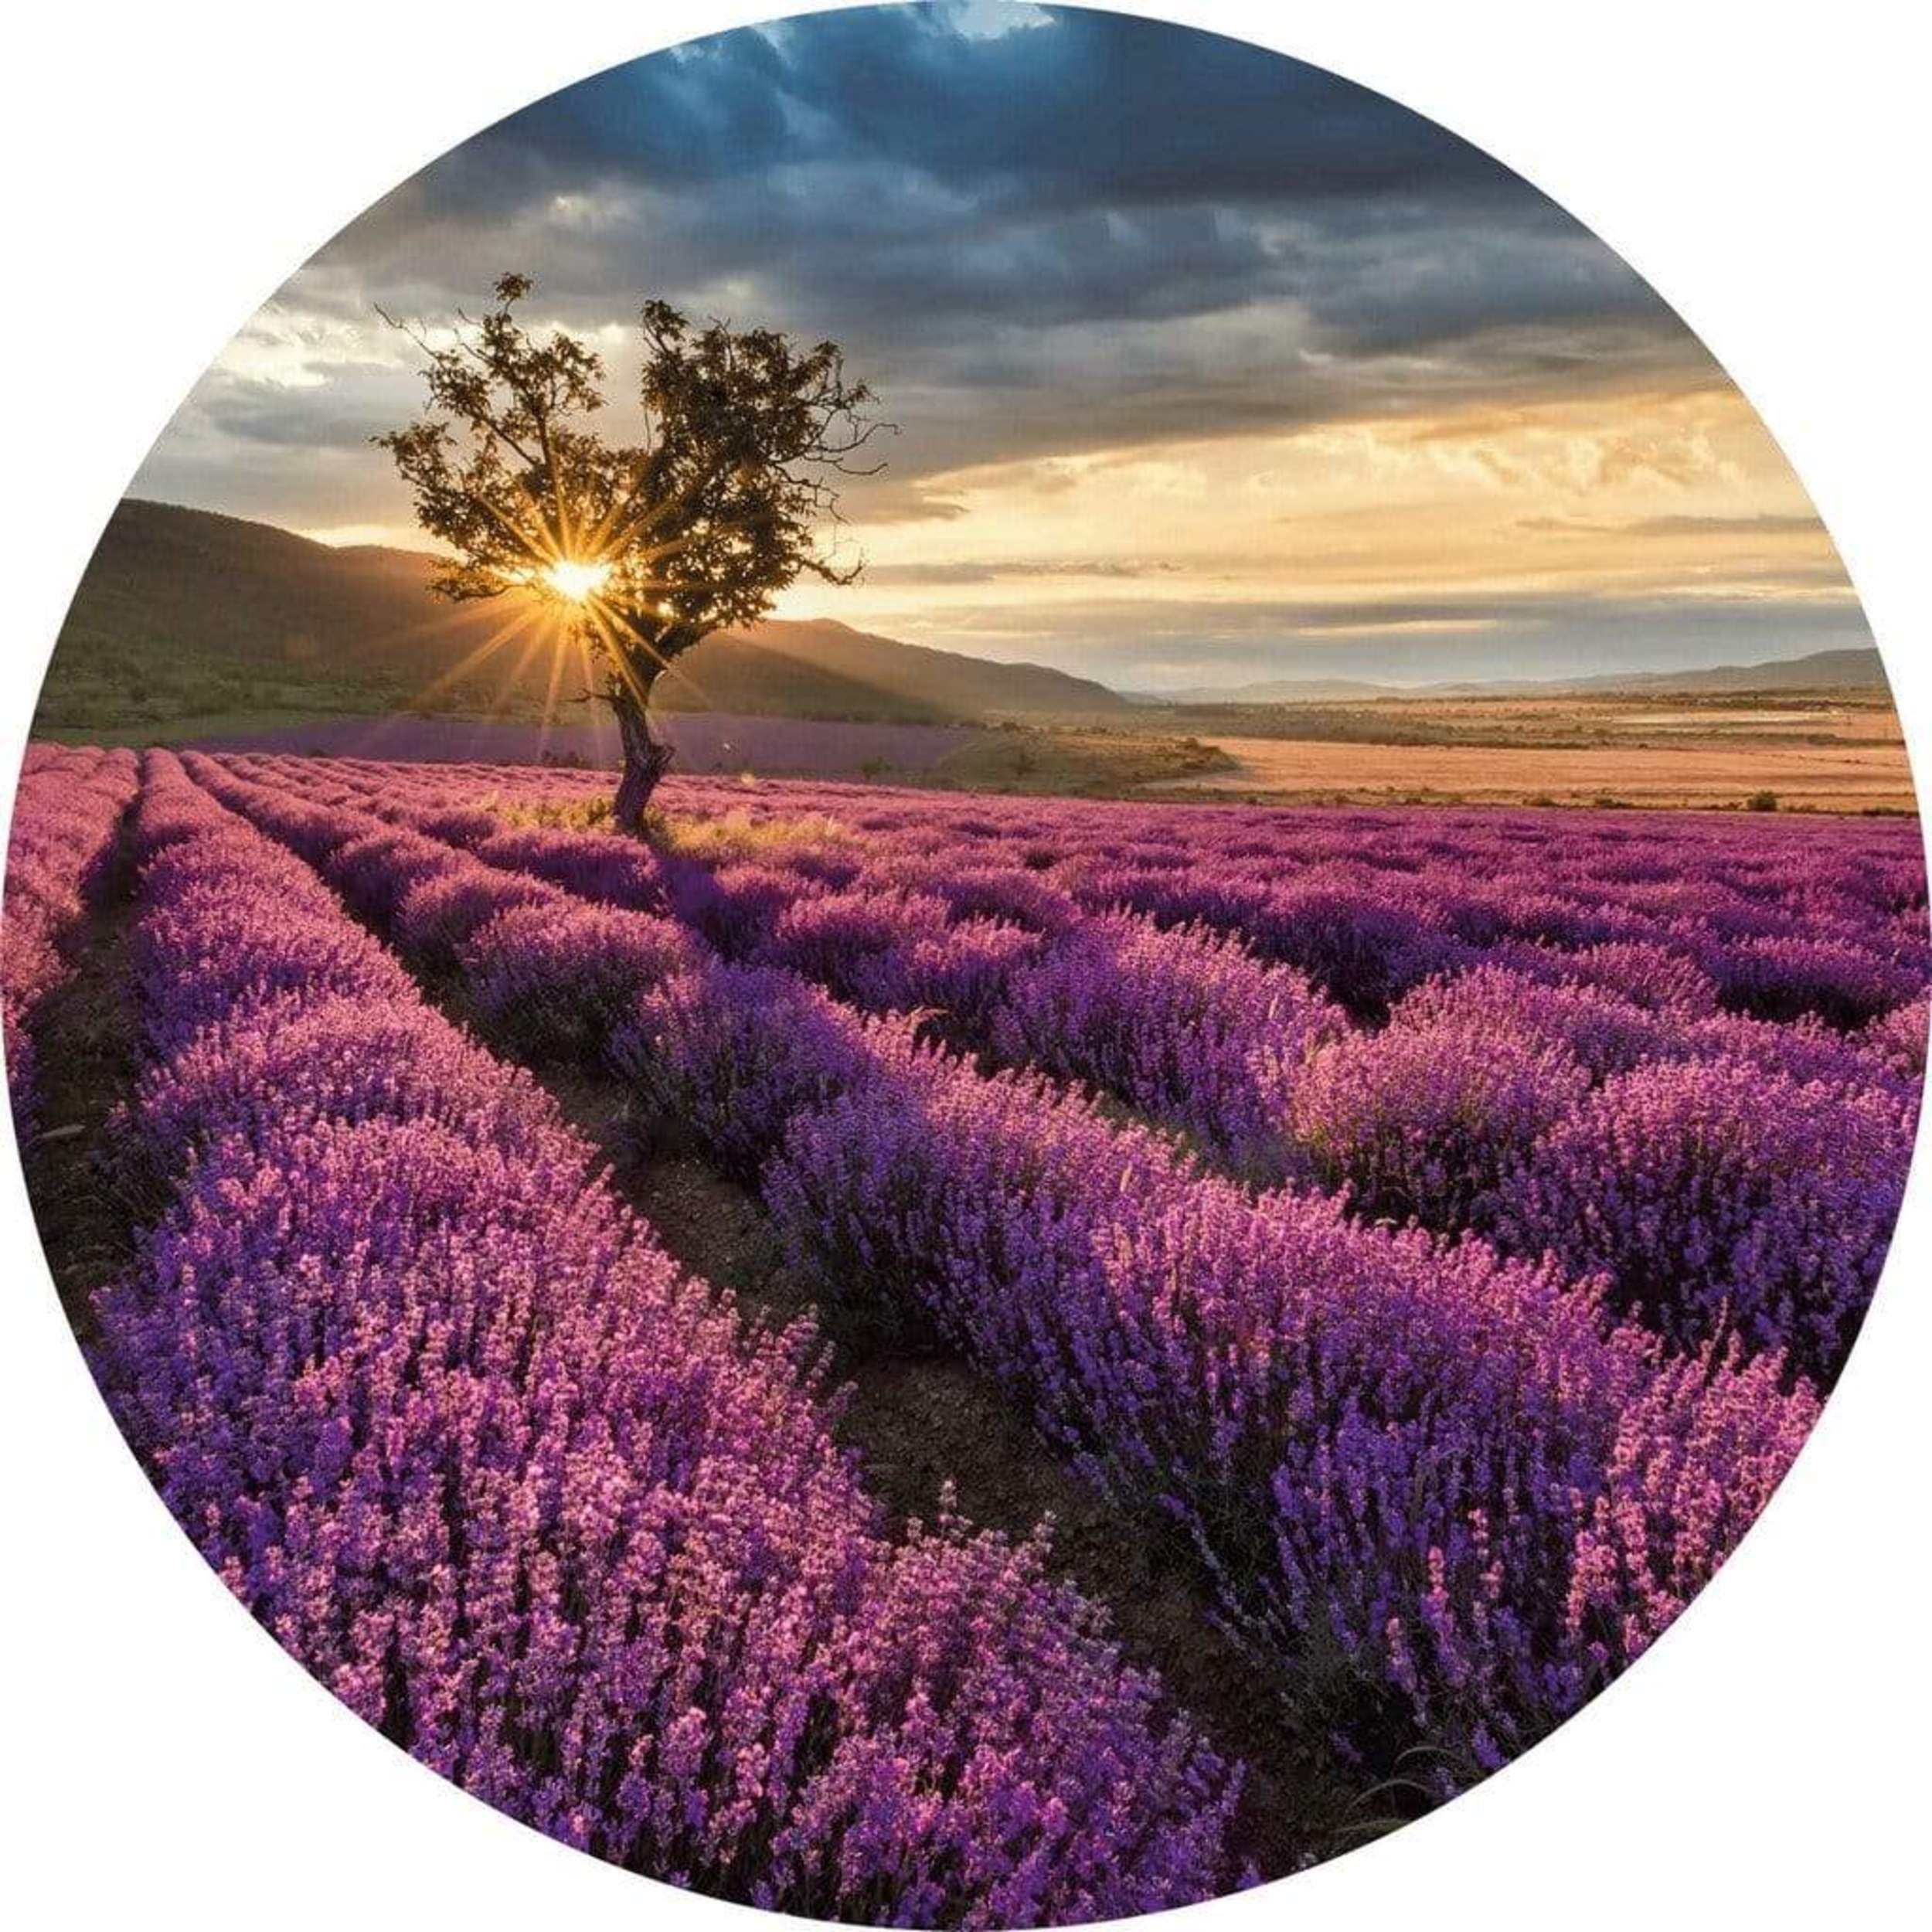 Fototapete Lavender in 140x140cm Rund Provence the